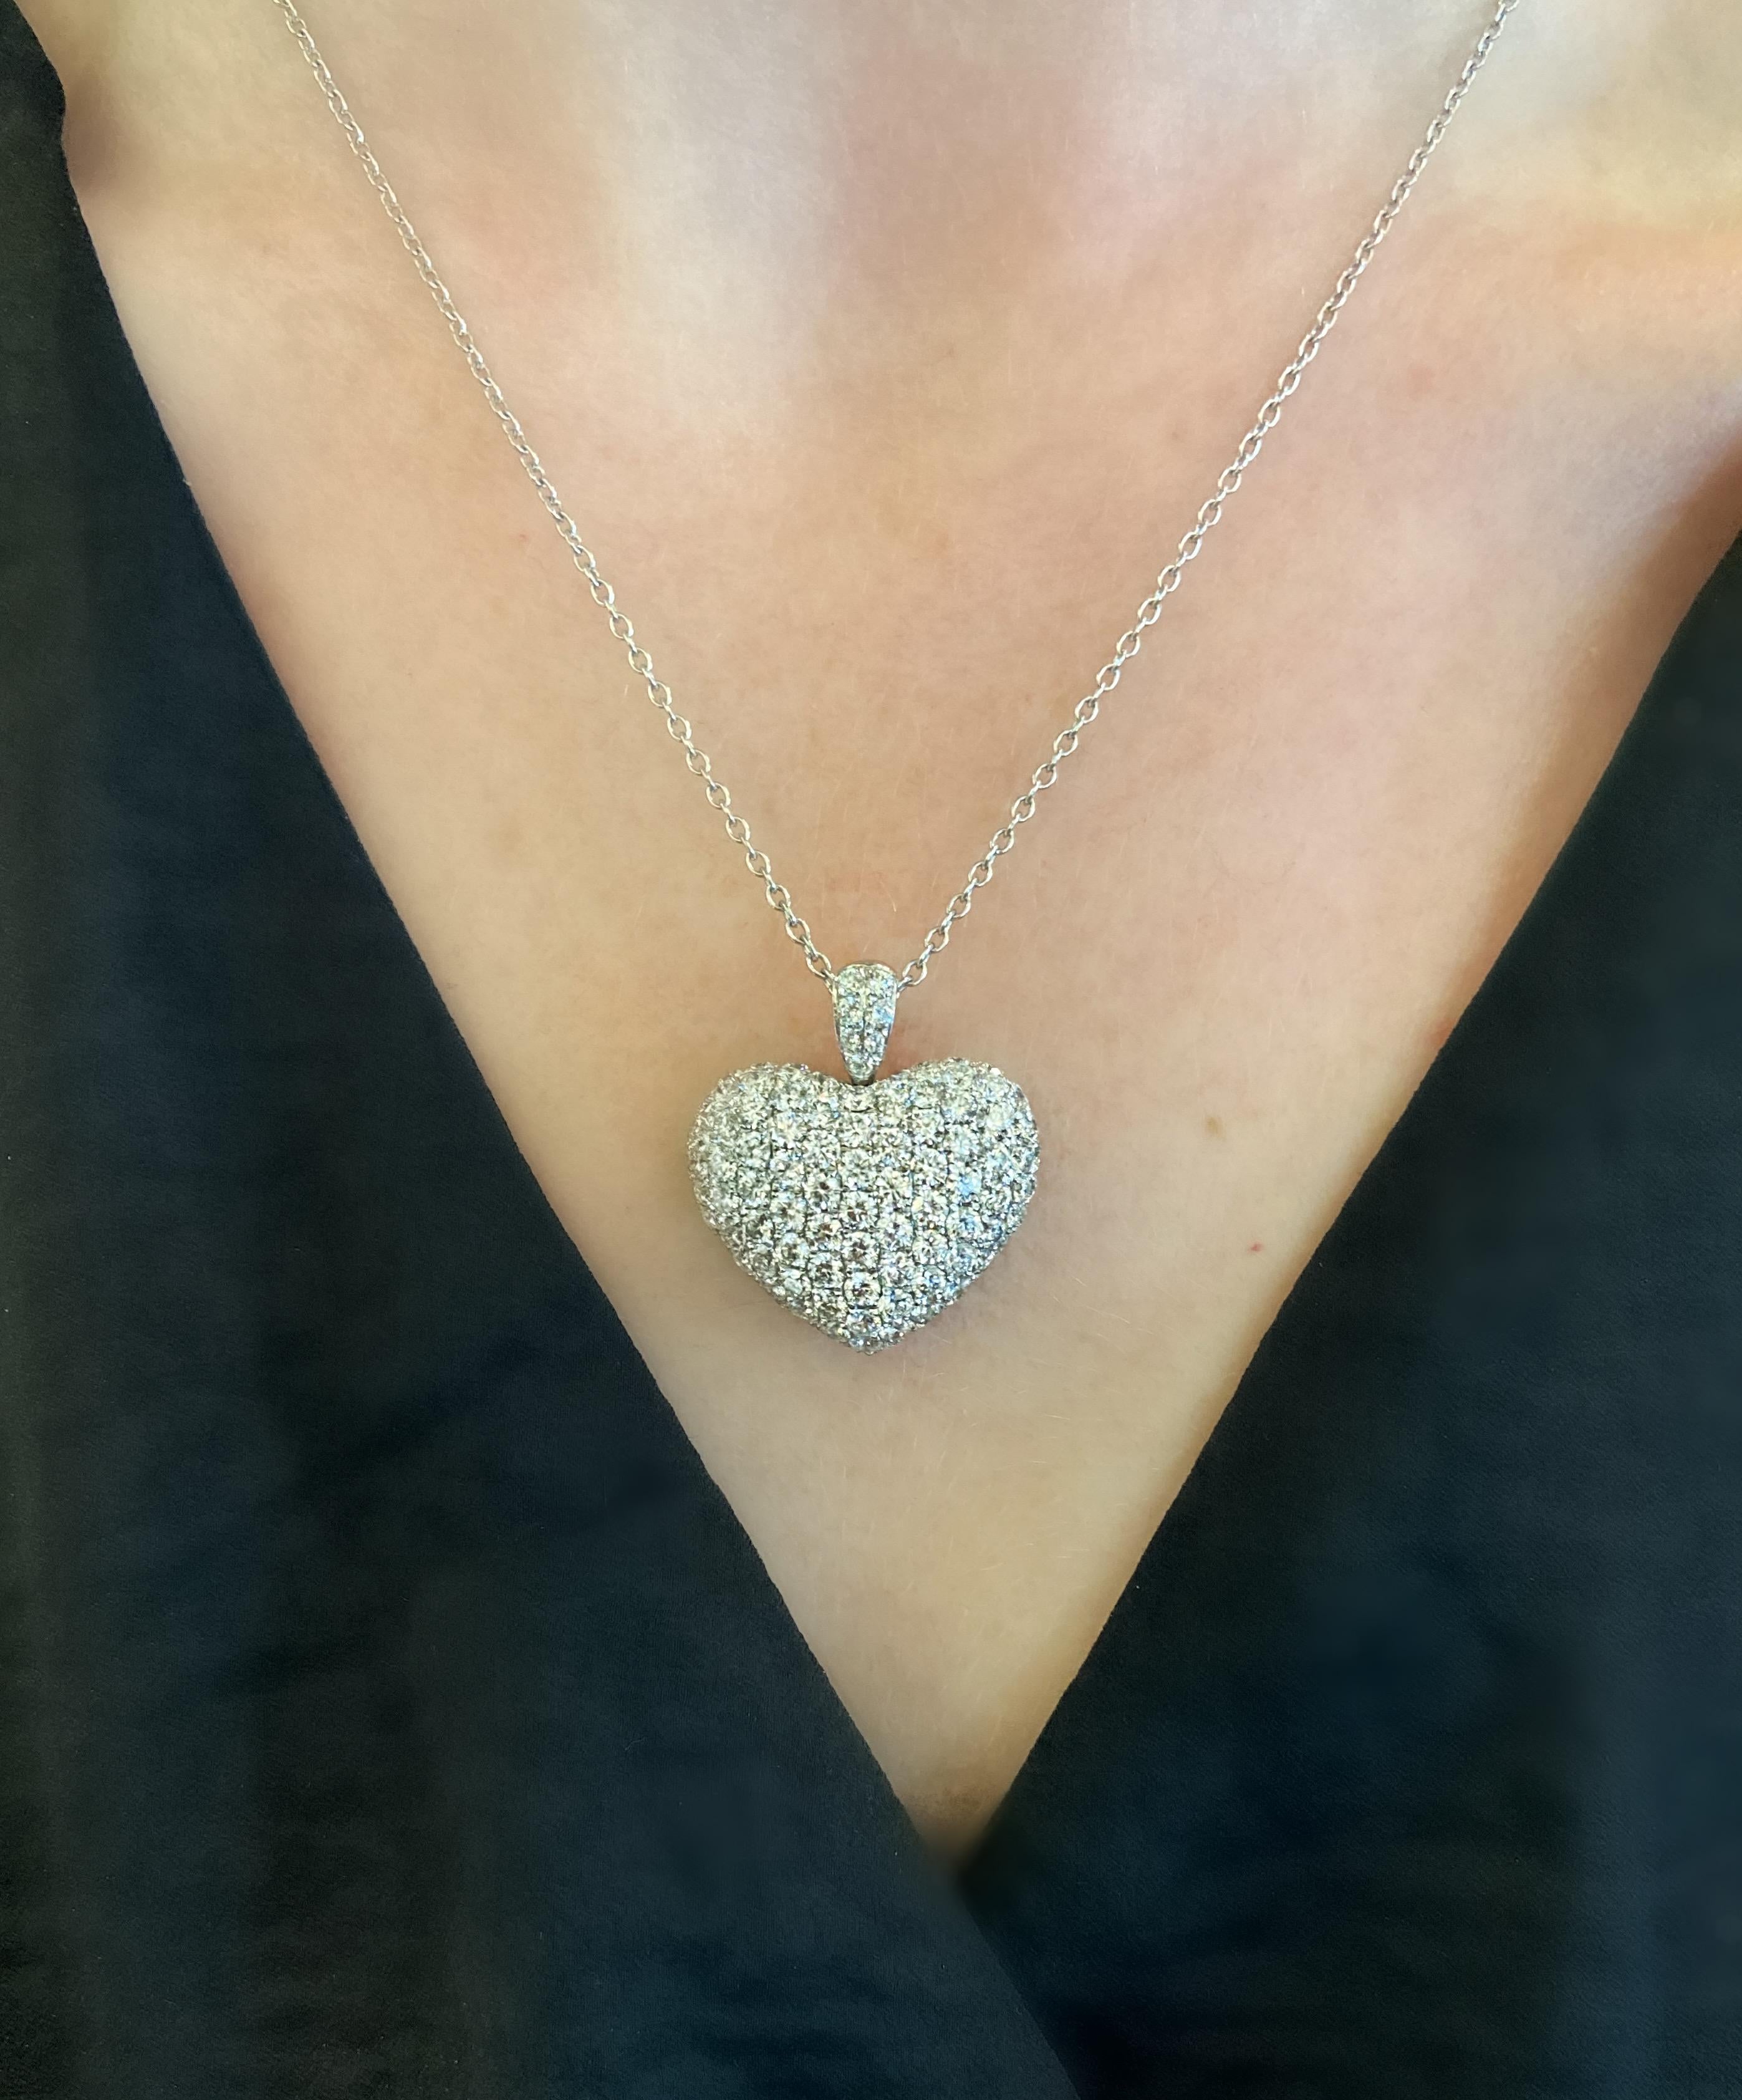 Odelia 4.21 Carat Diamond Heart Pendant Necklace in 18 Karat White Gold 2